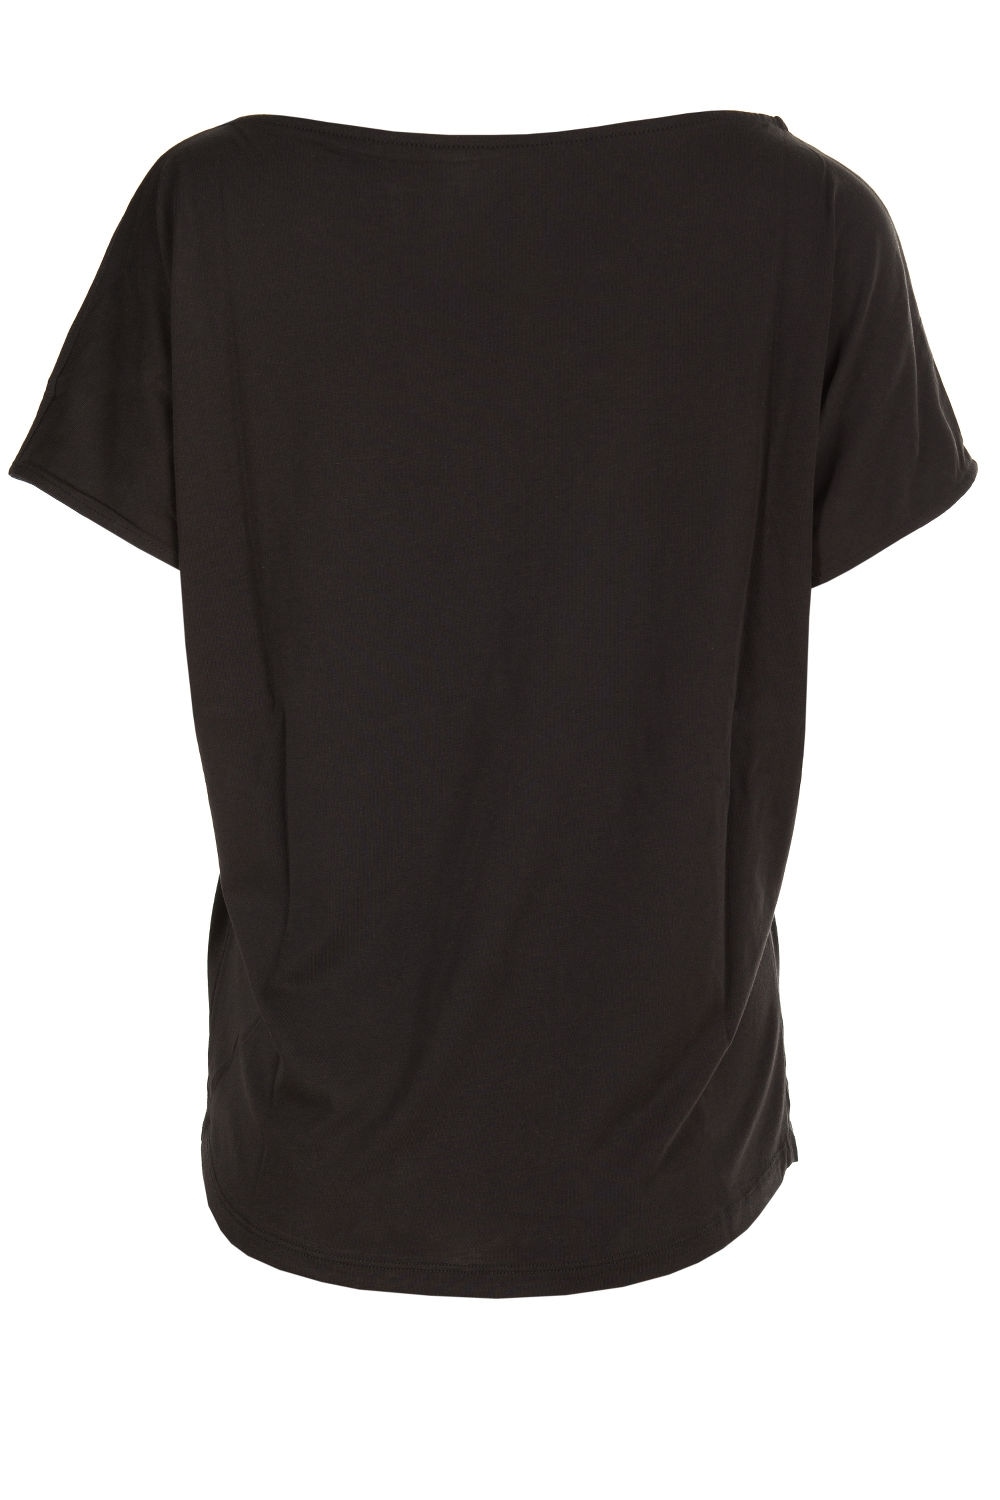 ♕ Winshape Oversize-Shirt »MCT002«, Ultra kaufen leicht versandkostenfrei